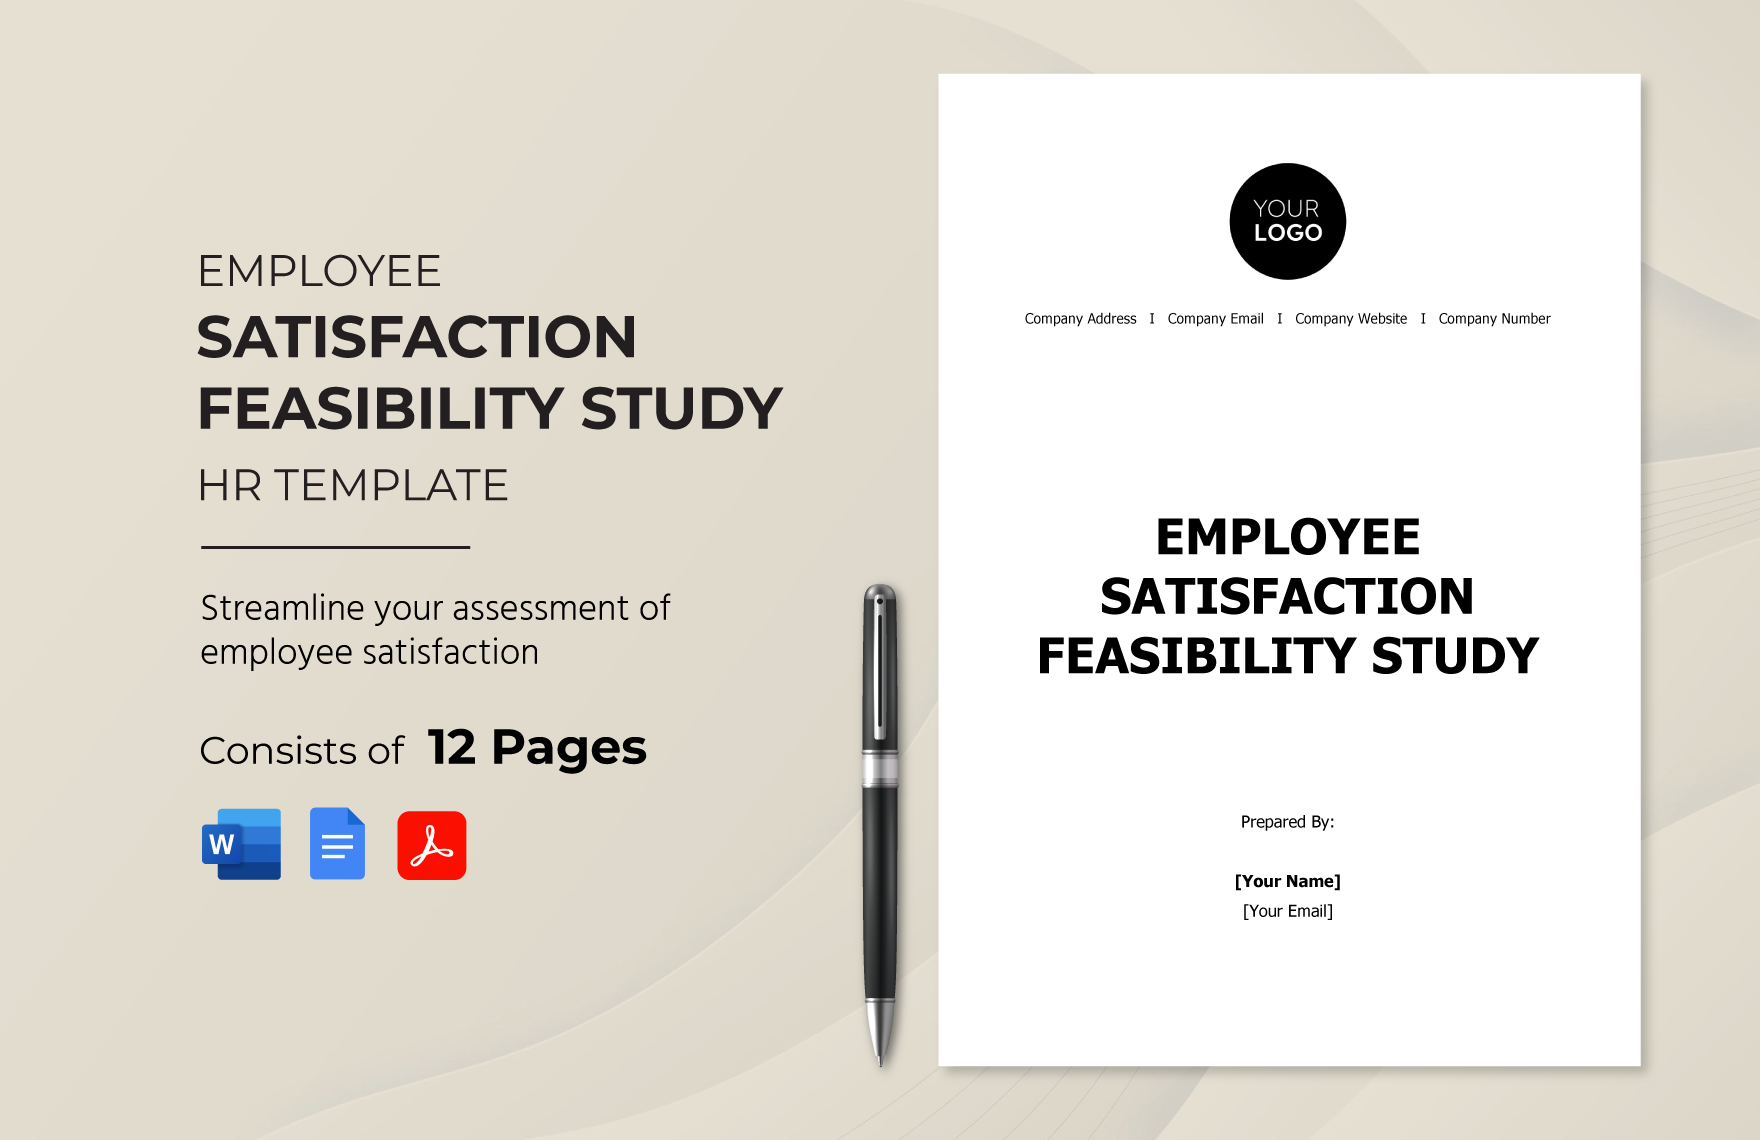 Employee Satisfaction Feasibility Study HR Template